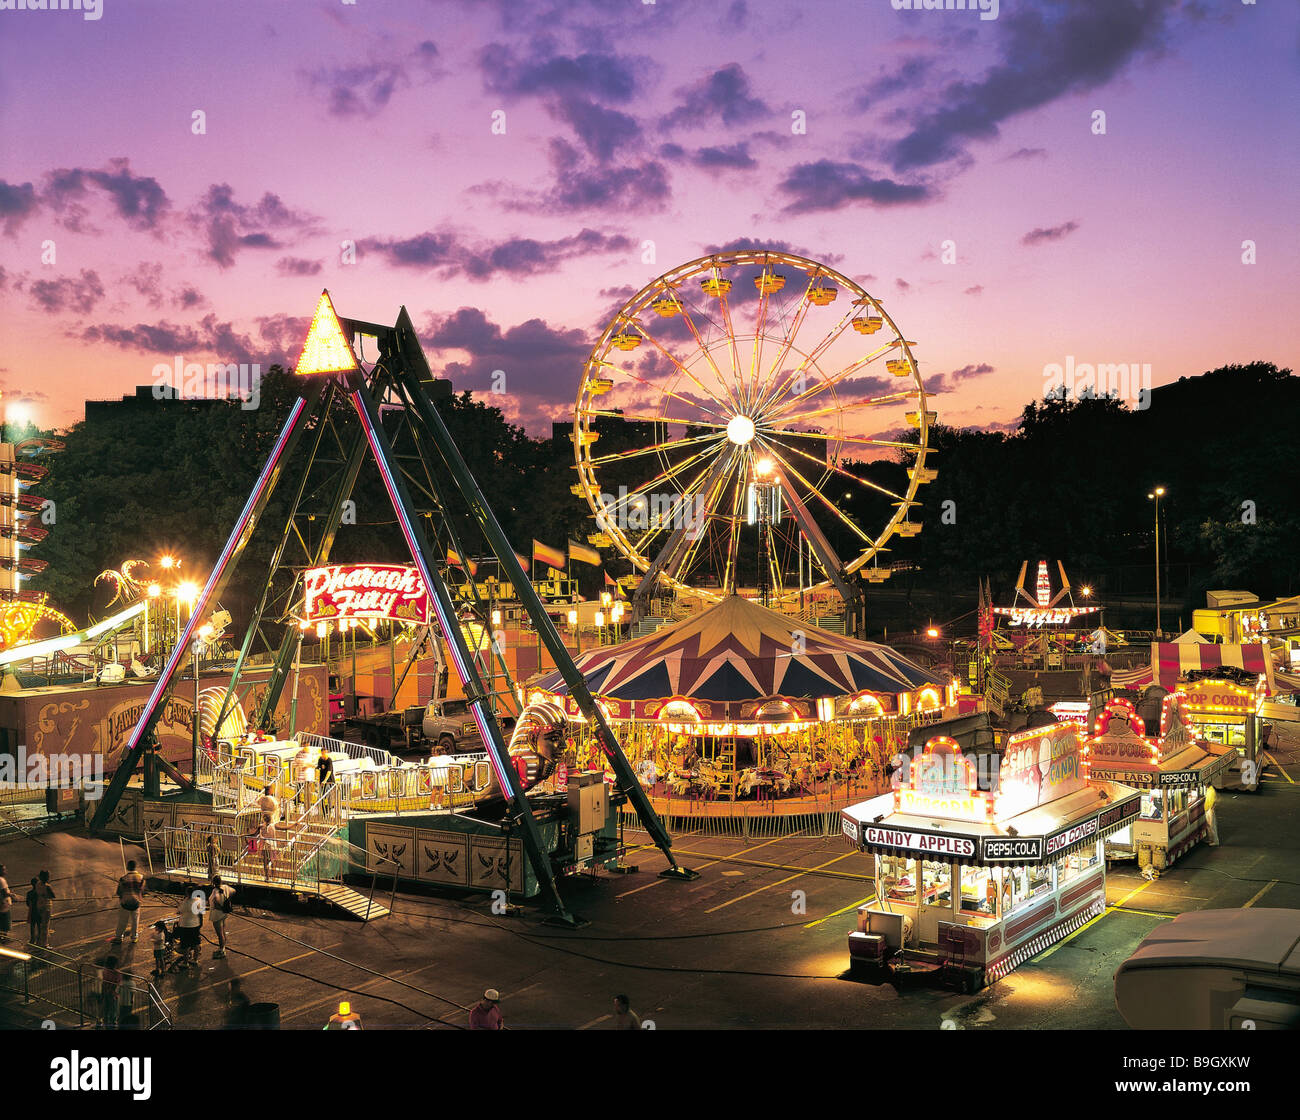 usa New York city Bronx festival twilight North America kermess amusement-party fairground rides Ferris wheel market-stands Stock Photo